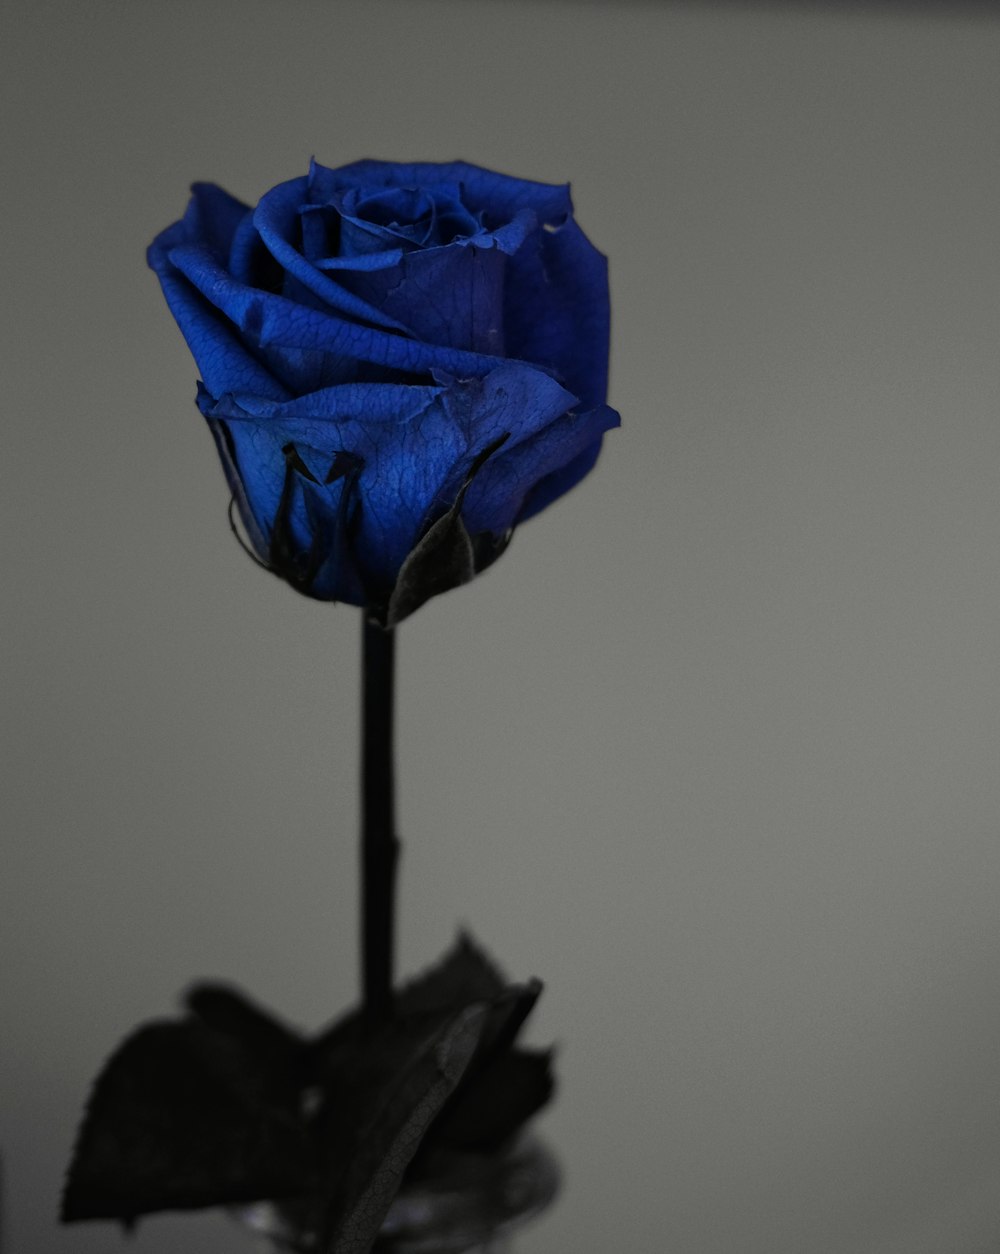 1000+ Blue Rose Pictures | Download Free Images on Unsplash